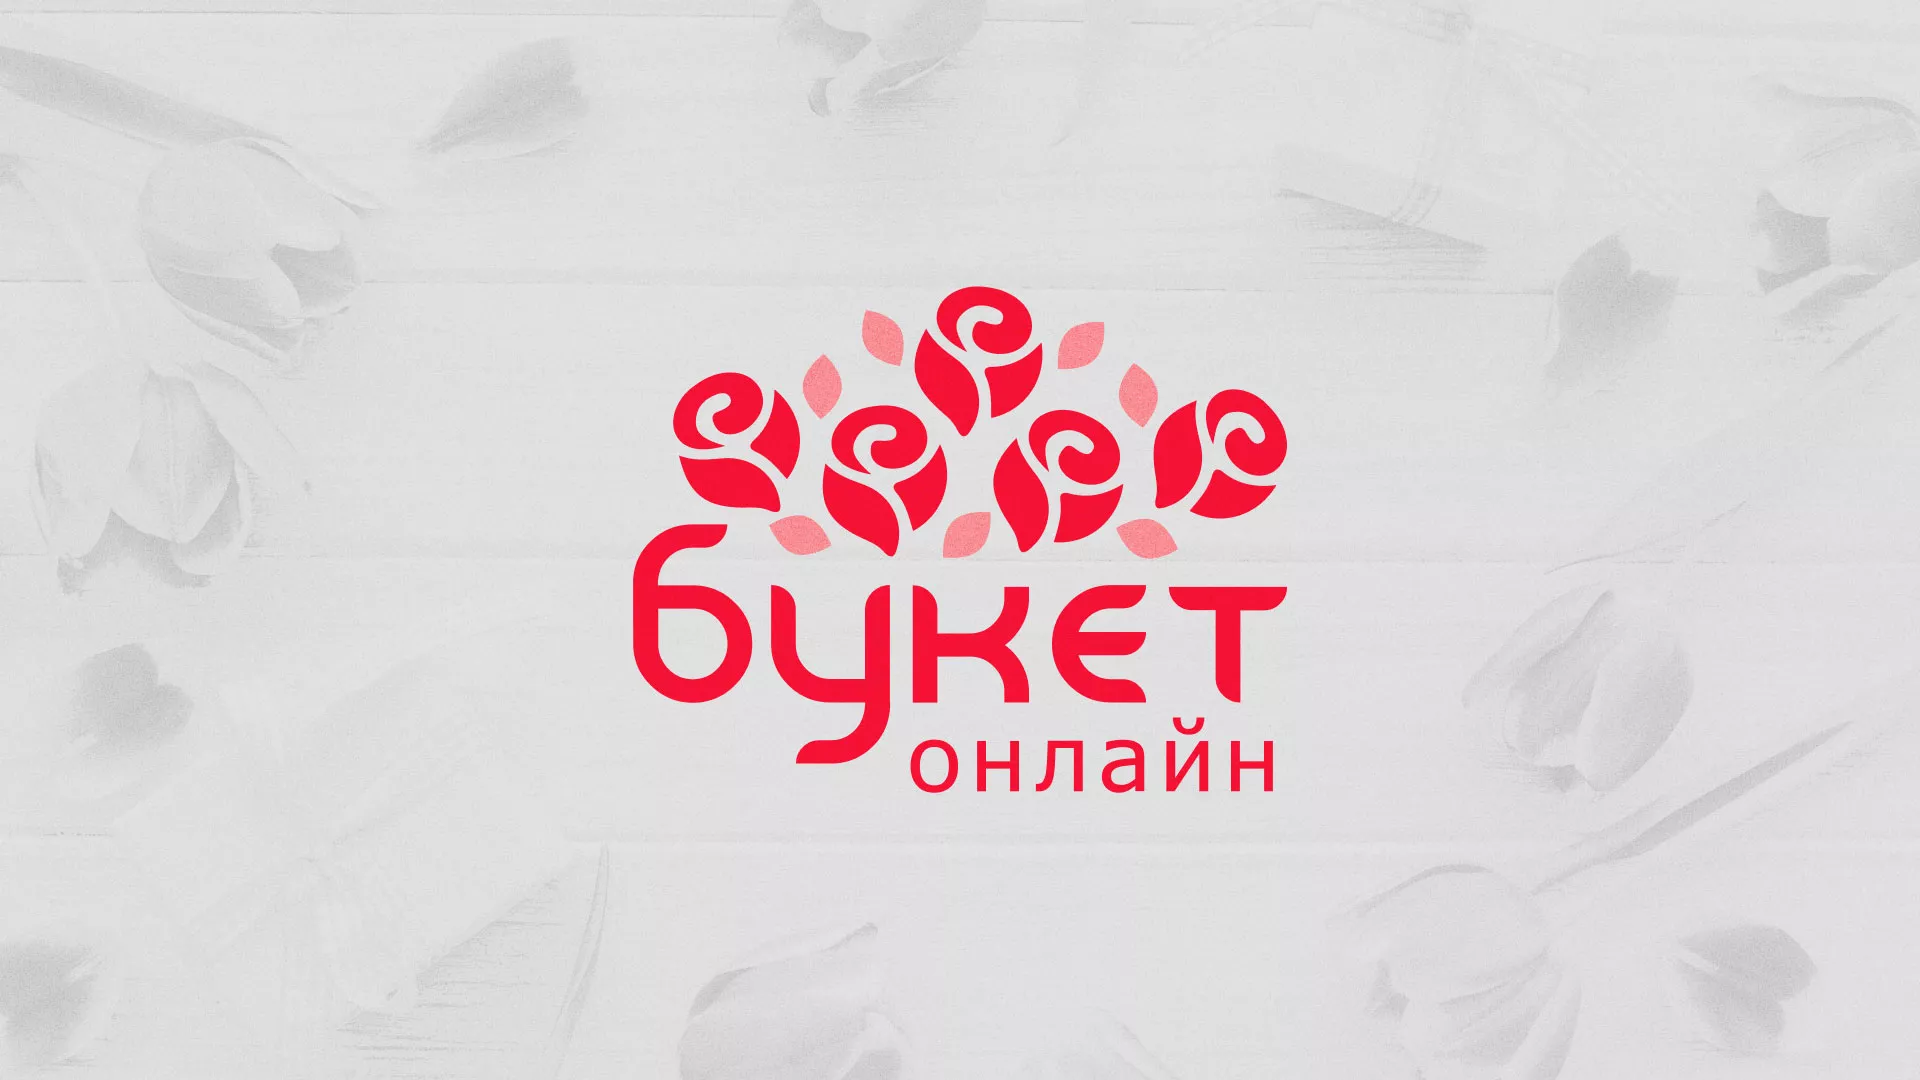 Создание интернет-магазина «Букет-онлайн» по цветам в Камешково